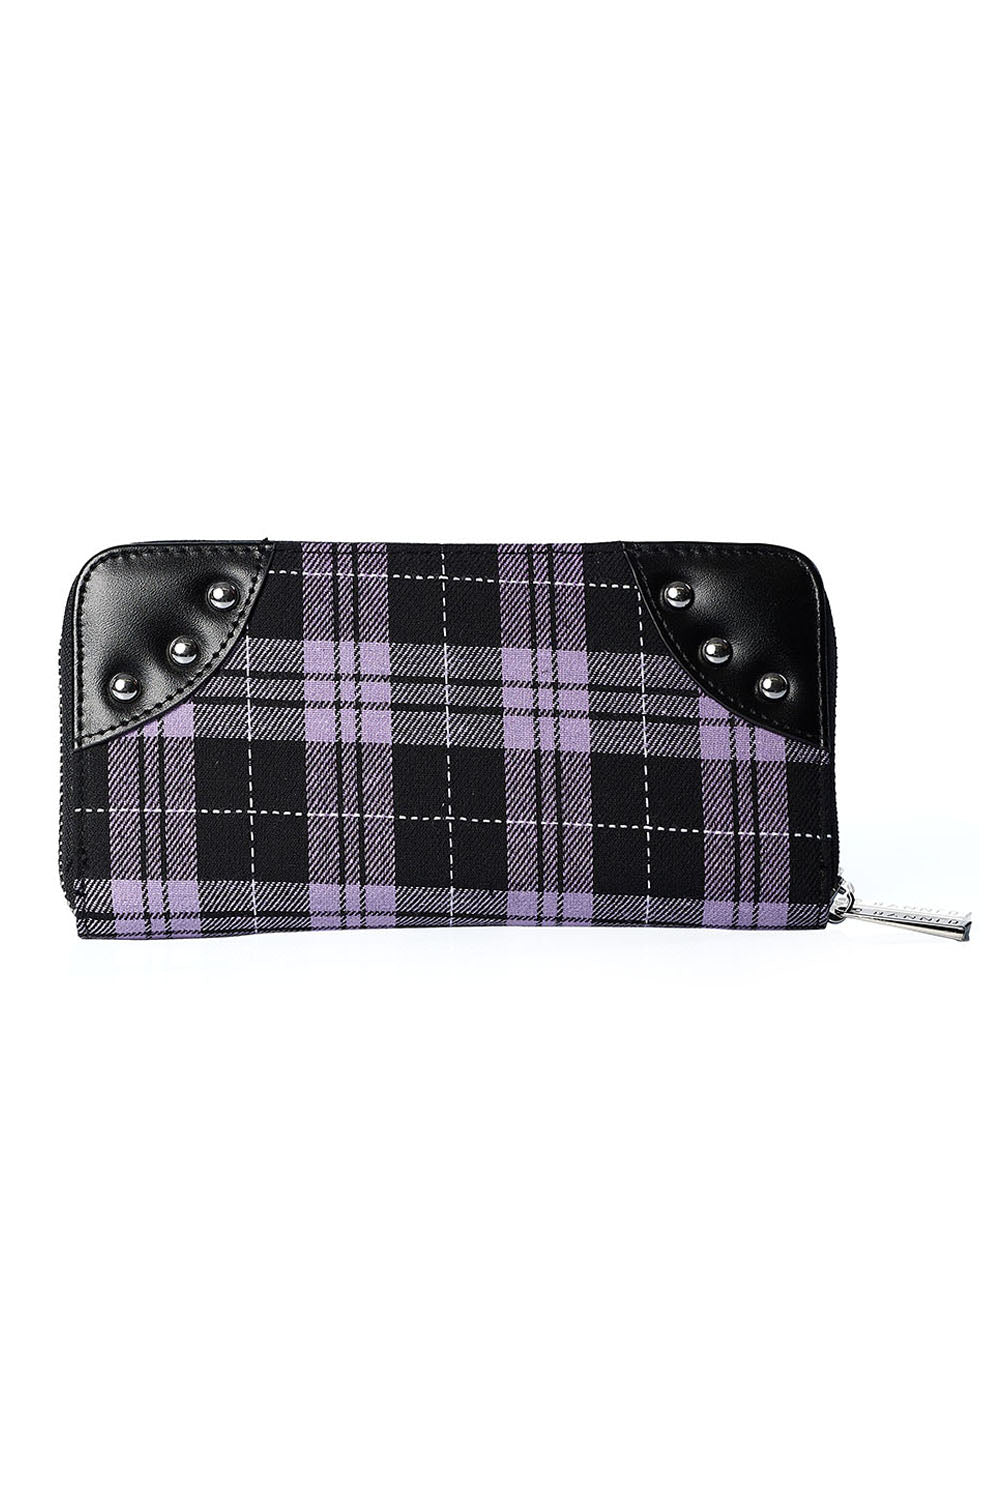 Banned Apparel Handcuff wallet | purple